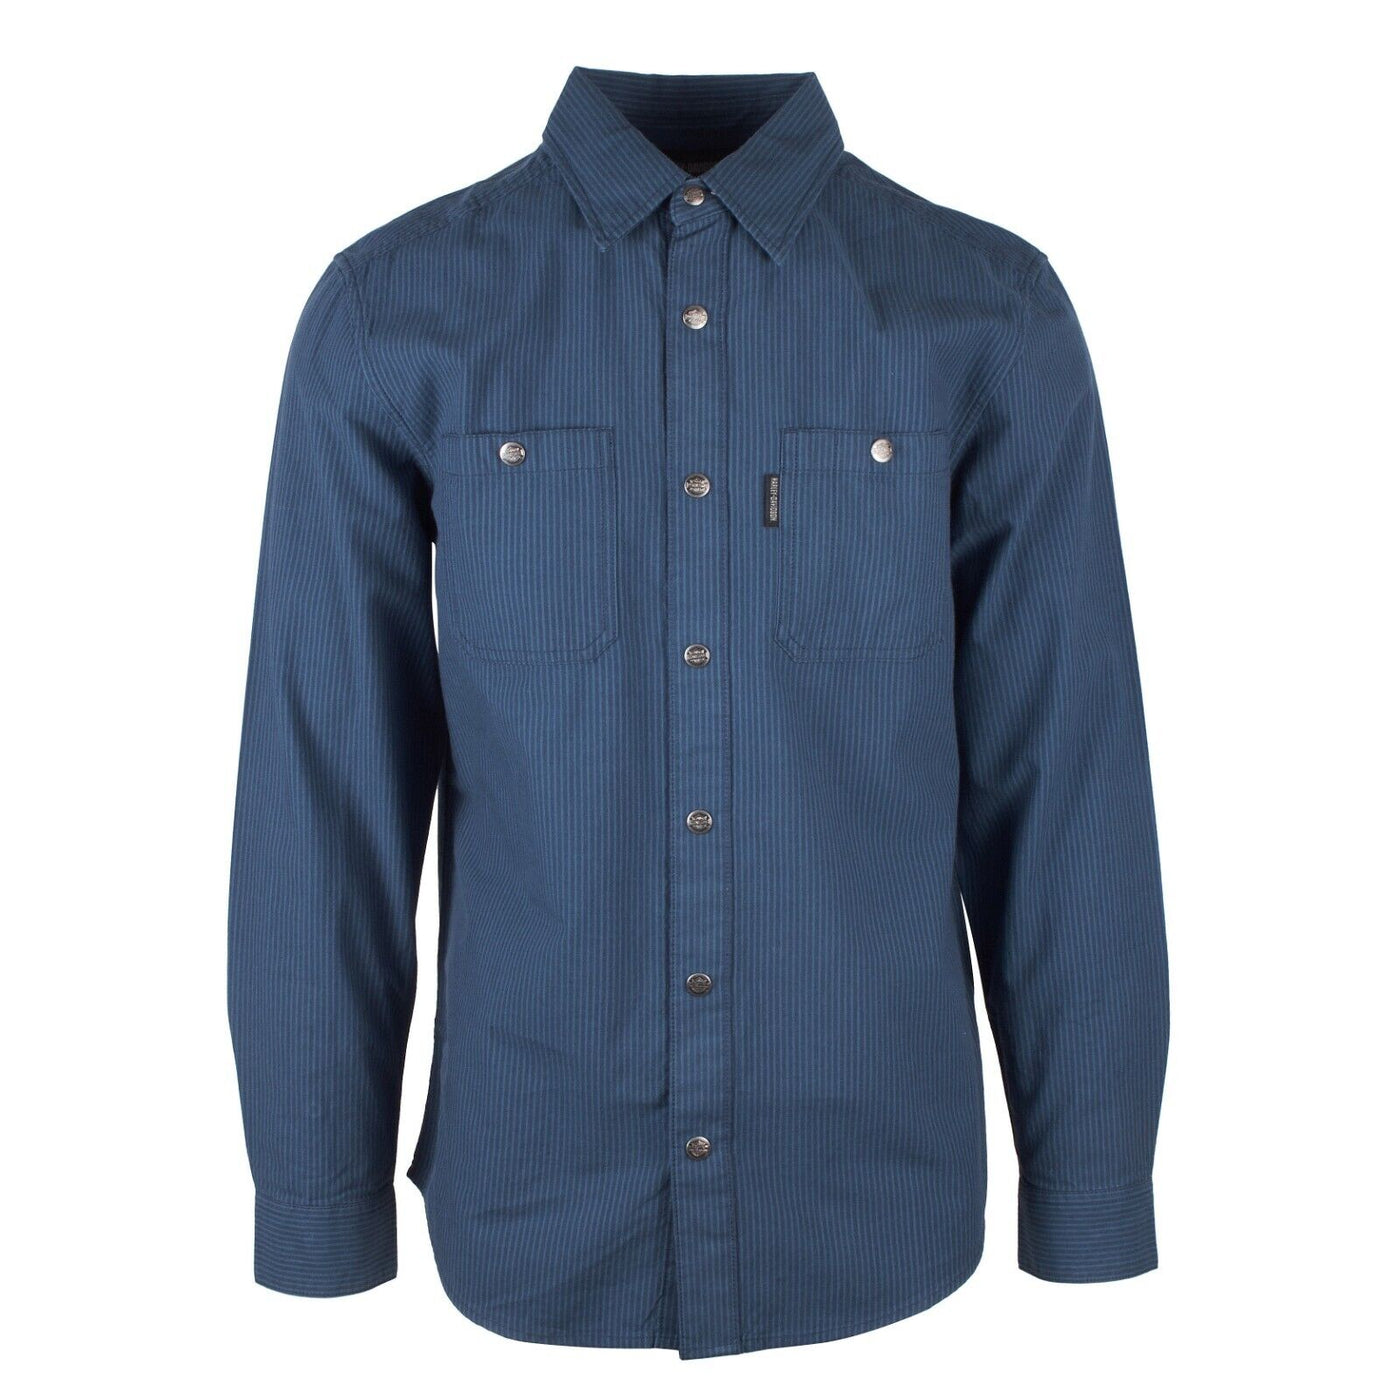 Harley-Davidson Men's Blue Amplifier Railroad Snap Button L/S Woven Shirt (S44)